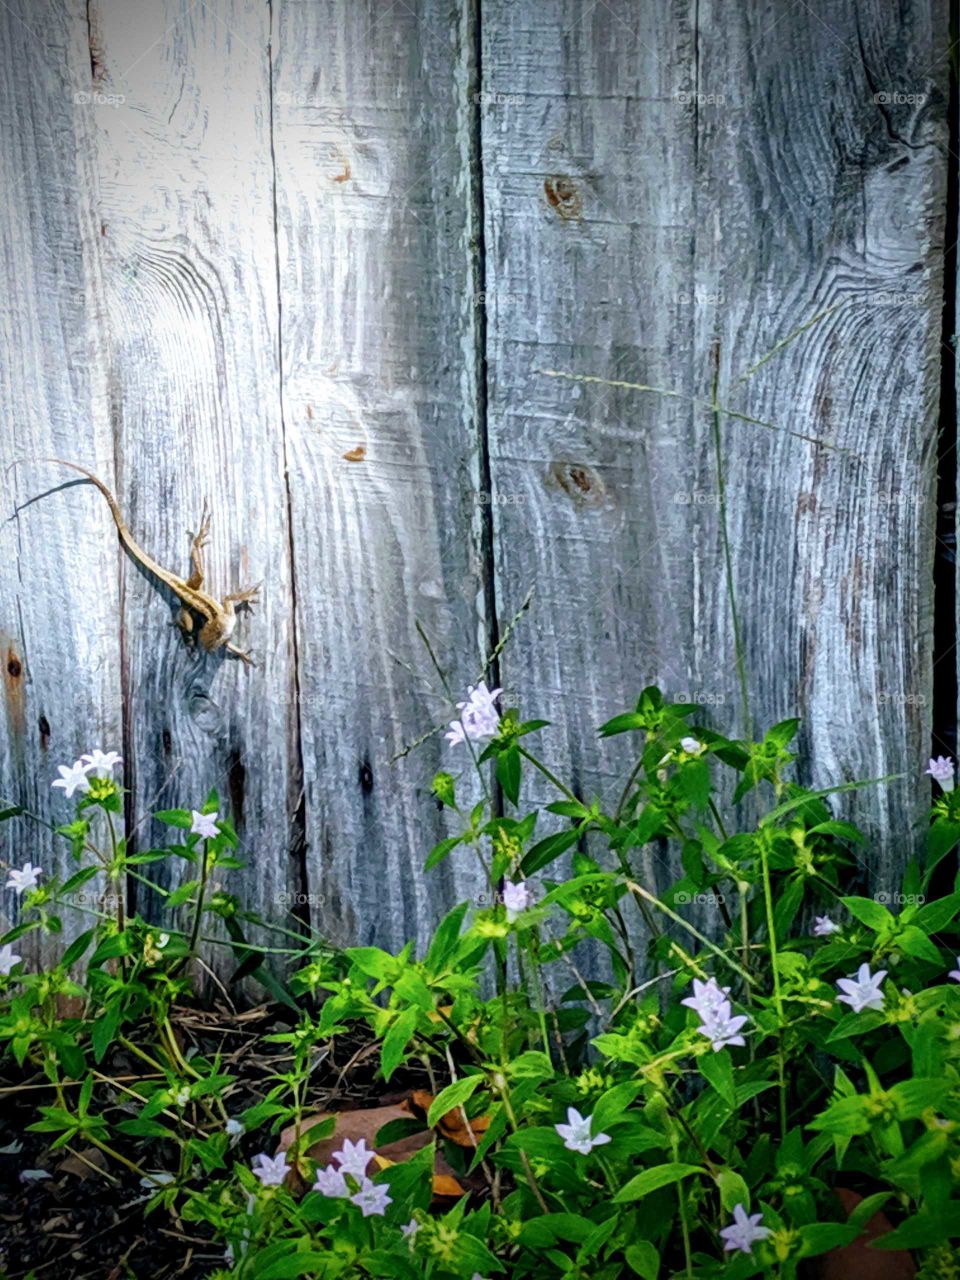 Shabby Chic Lizard on a Fence